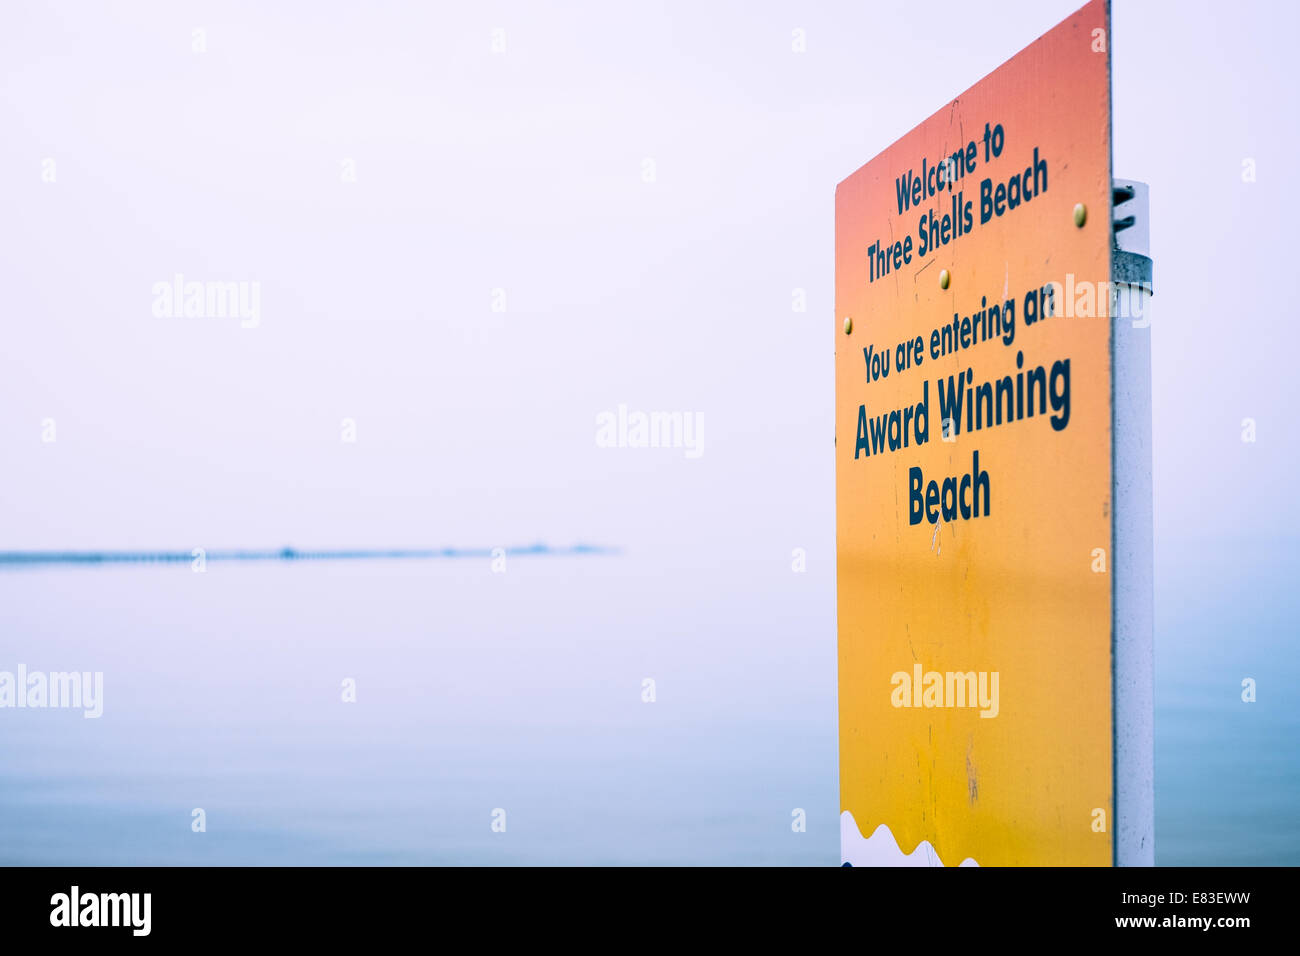 Drei Muscheln Strand, Southend, mit Blue cross processing Effekt. Stockfoto